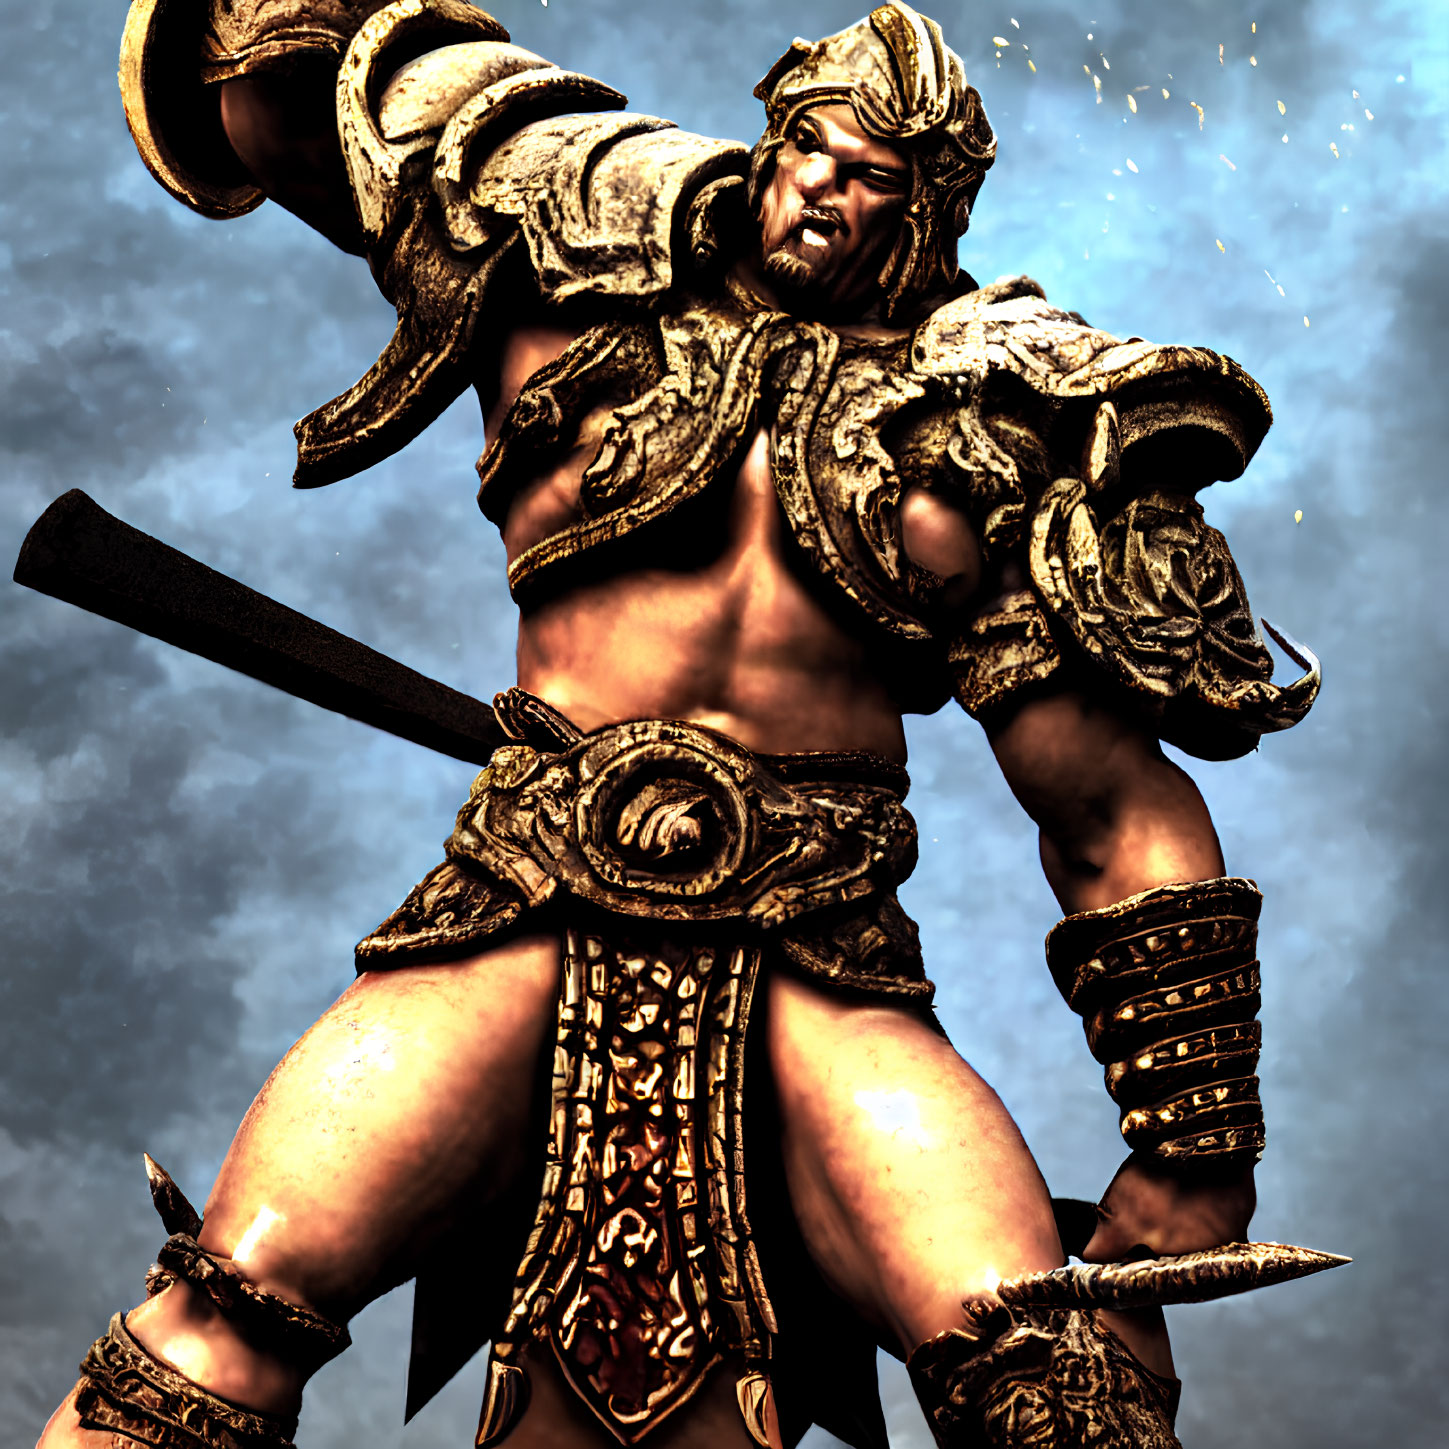 Muscular warrior in ornate armor wields large hammer under moody sky